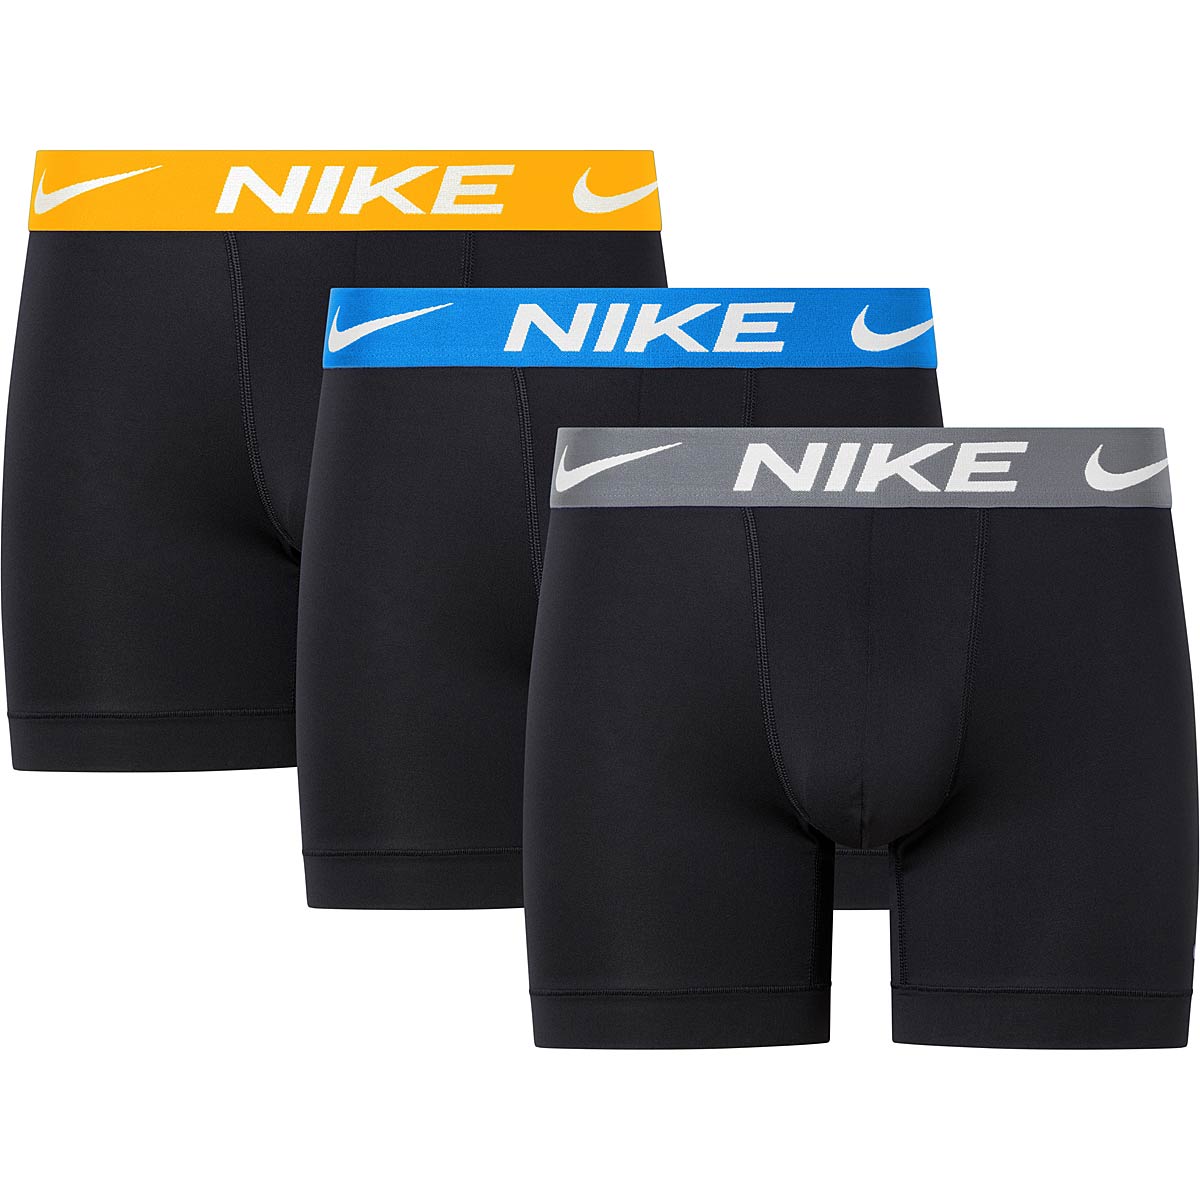 Image of Nike Boxer Brief 3pk, Yellow/blue/grey